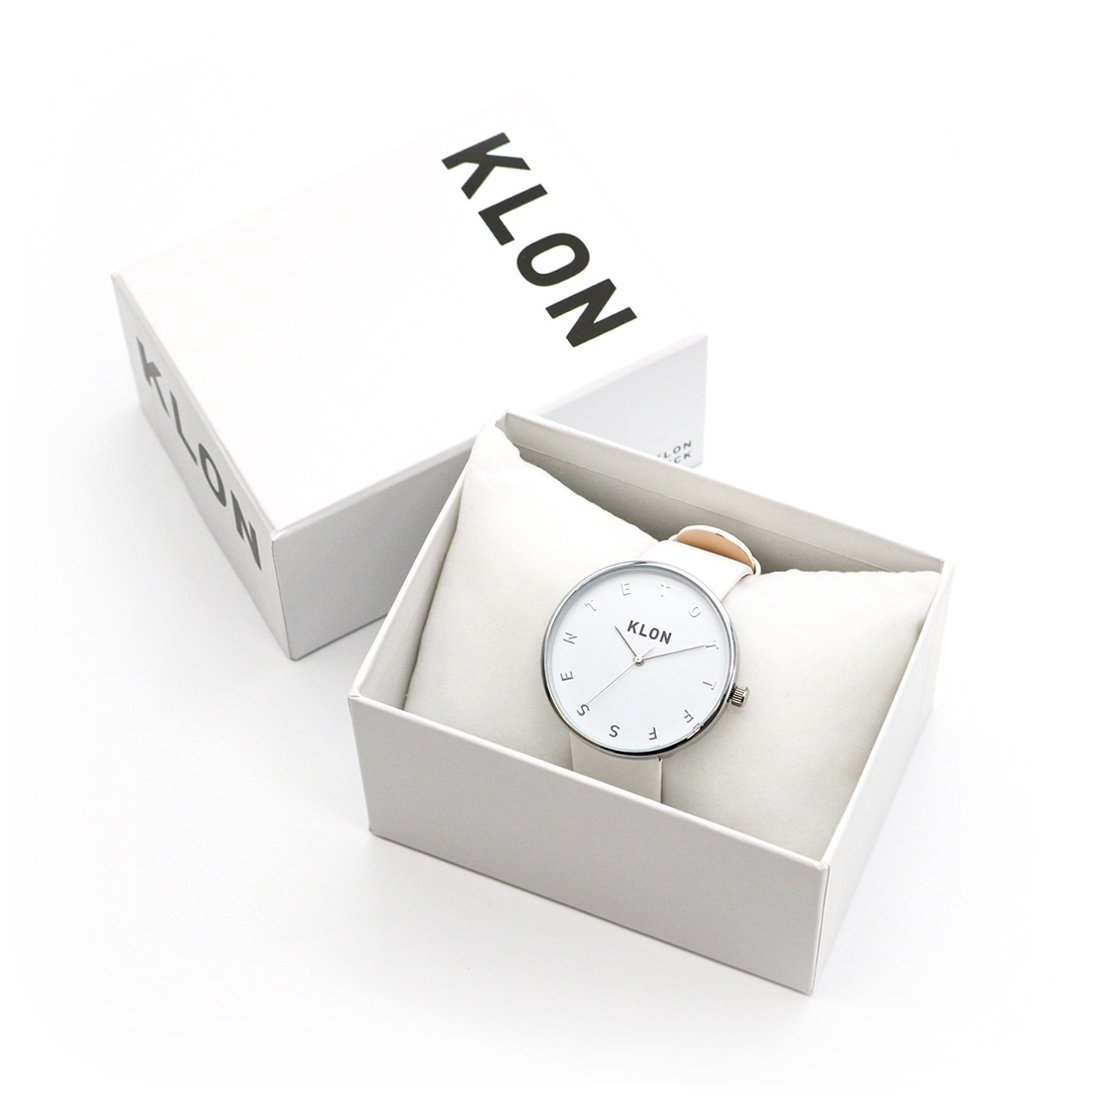 KLON ALPHABET TIME WHITE Ver.SILVER 40mm カジュアル 腕時計